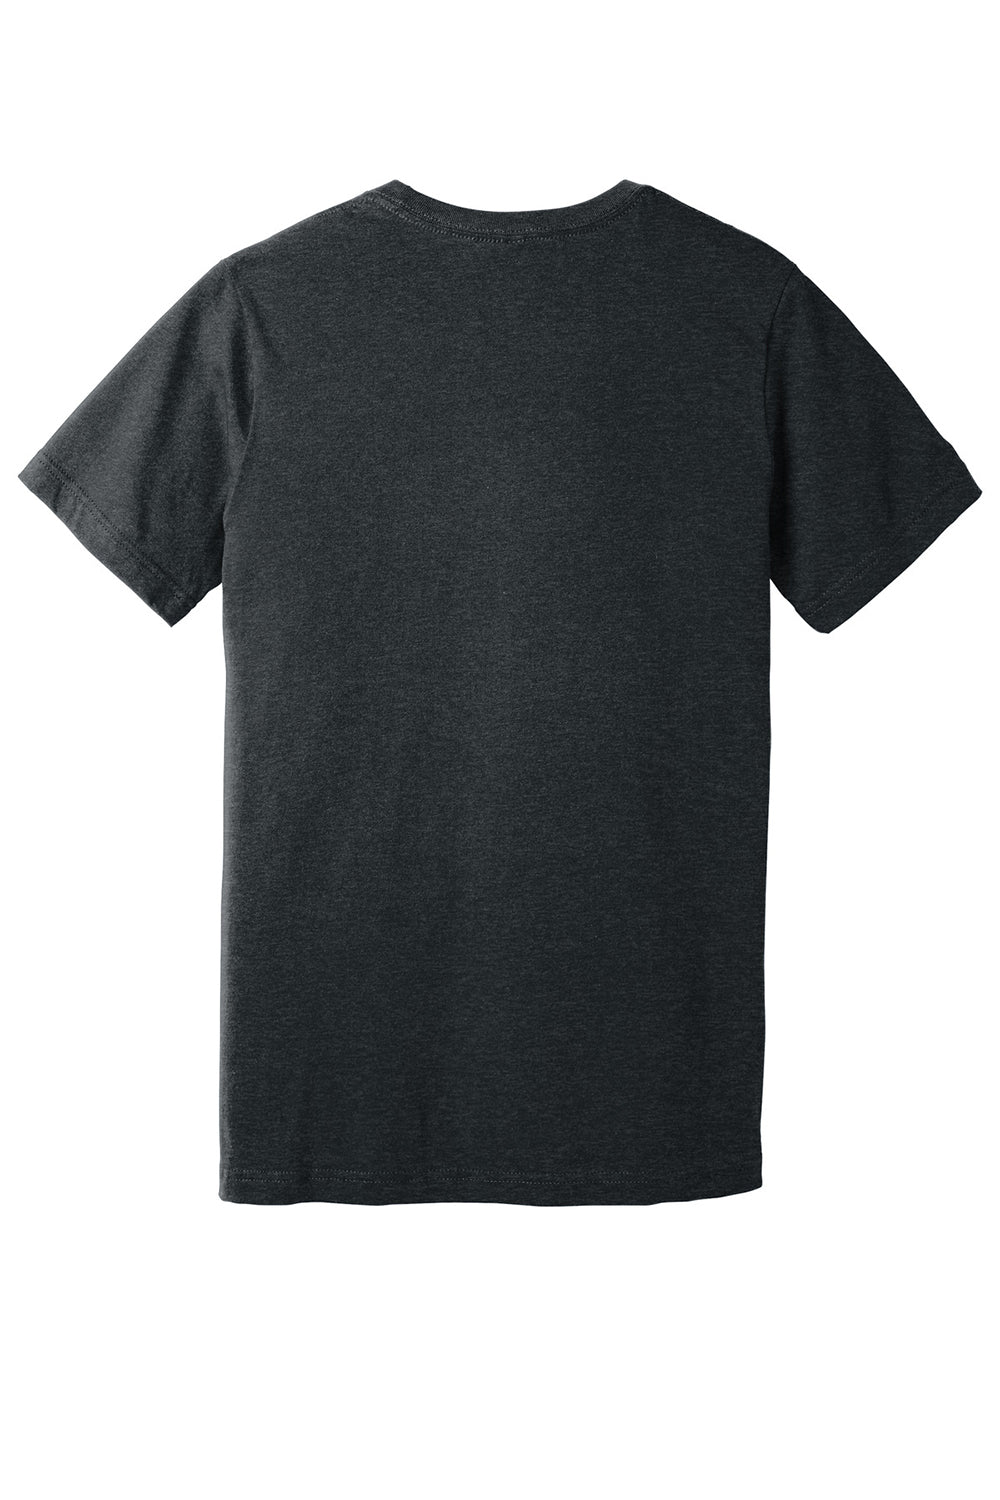 Bella + Canvas BC3005CVC Mens CVC Short Sleeve V-Neck T-Shirt Heather Dark Grey Flat Back